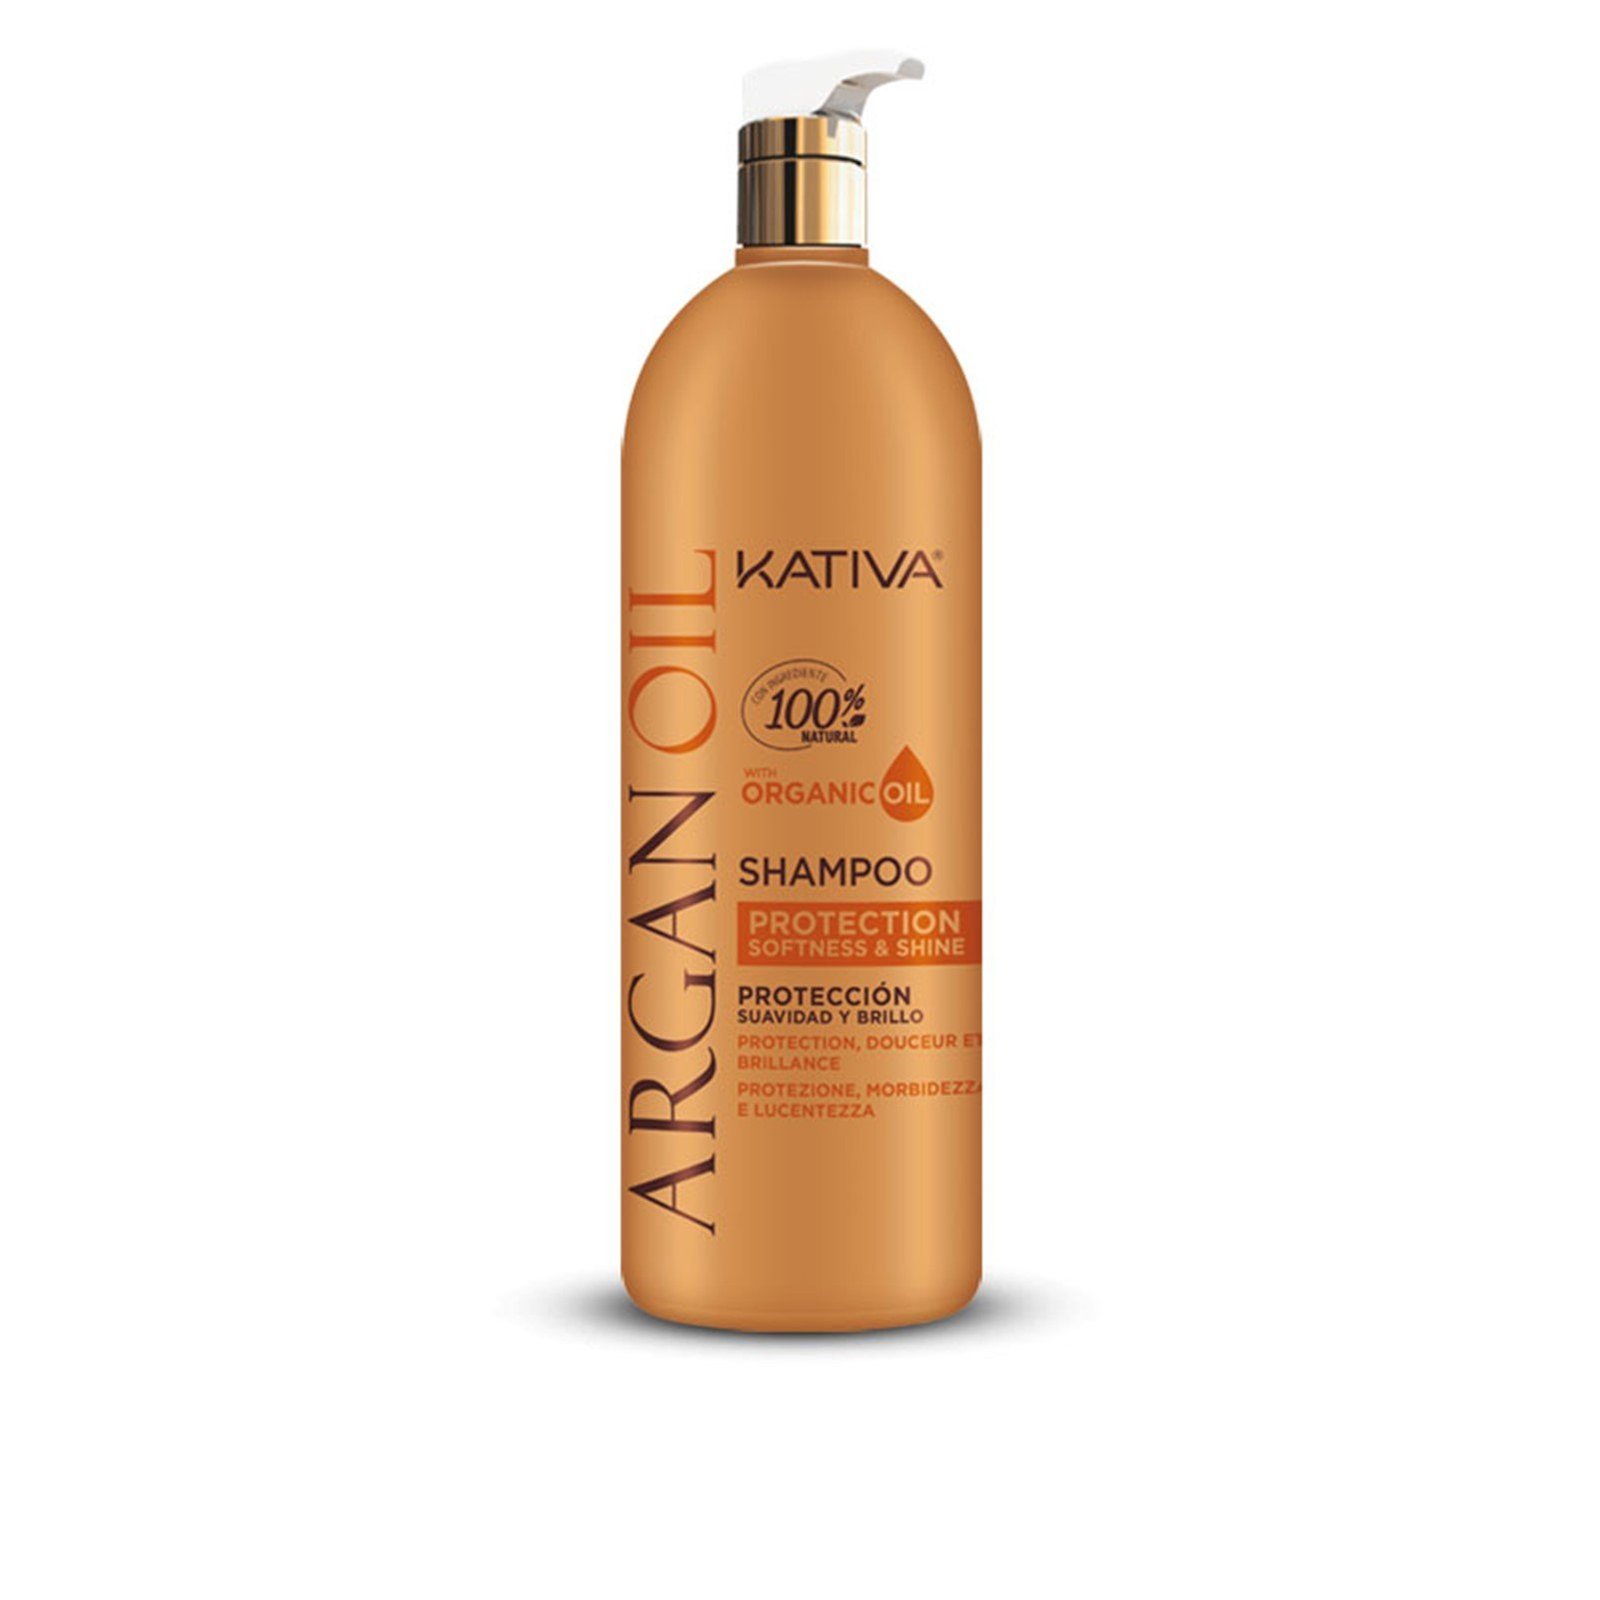 Kativa Argan Oil Protection Softness & Shine Shampoo 1L (33.8 fl oz)